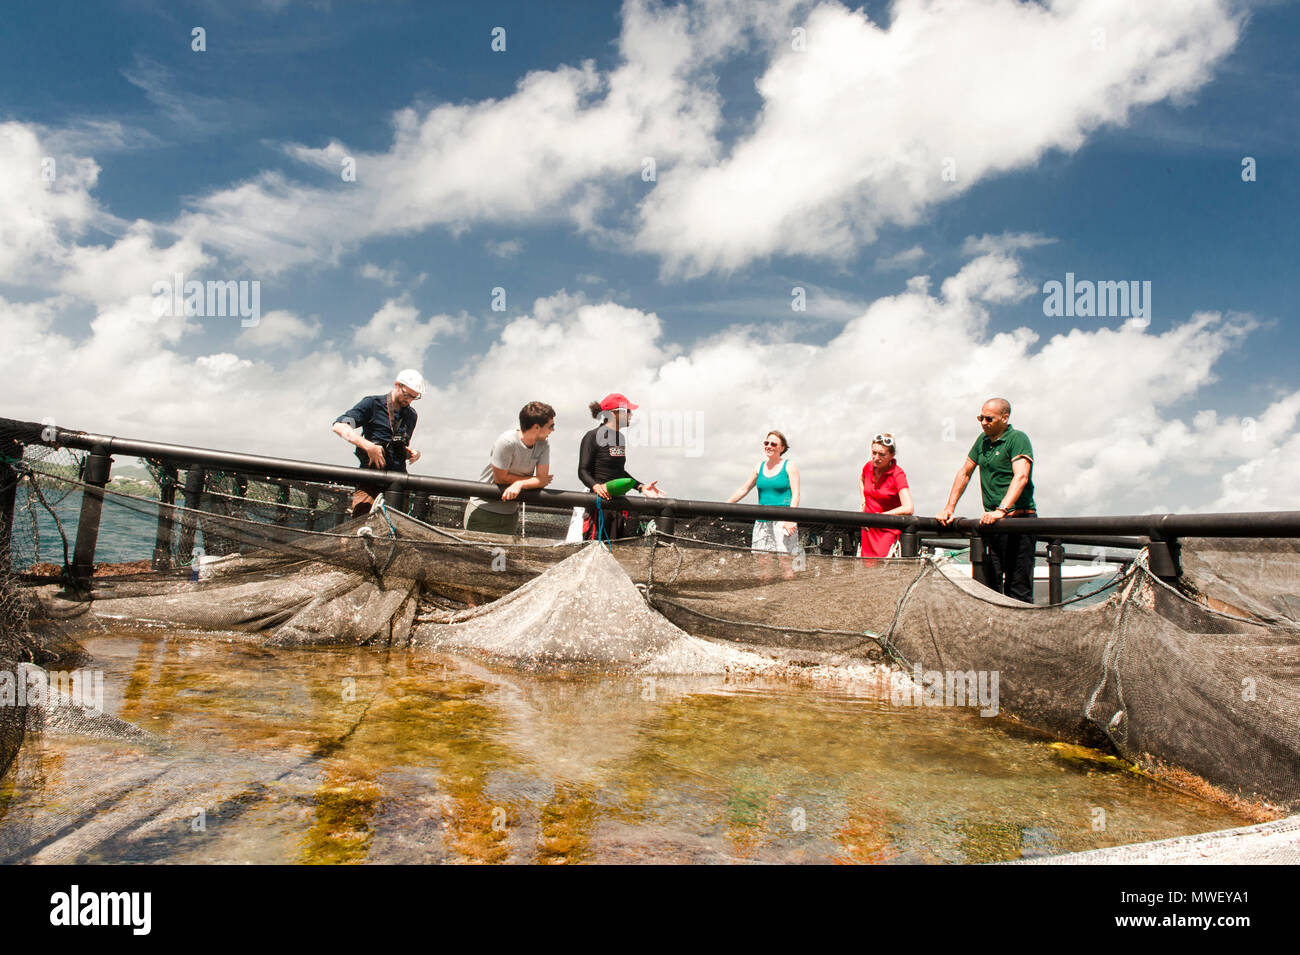 Les touristes explorant l'aquaculture de la baie de Le Robert, Martinique Banque D'Images